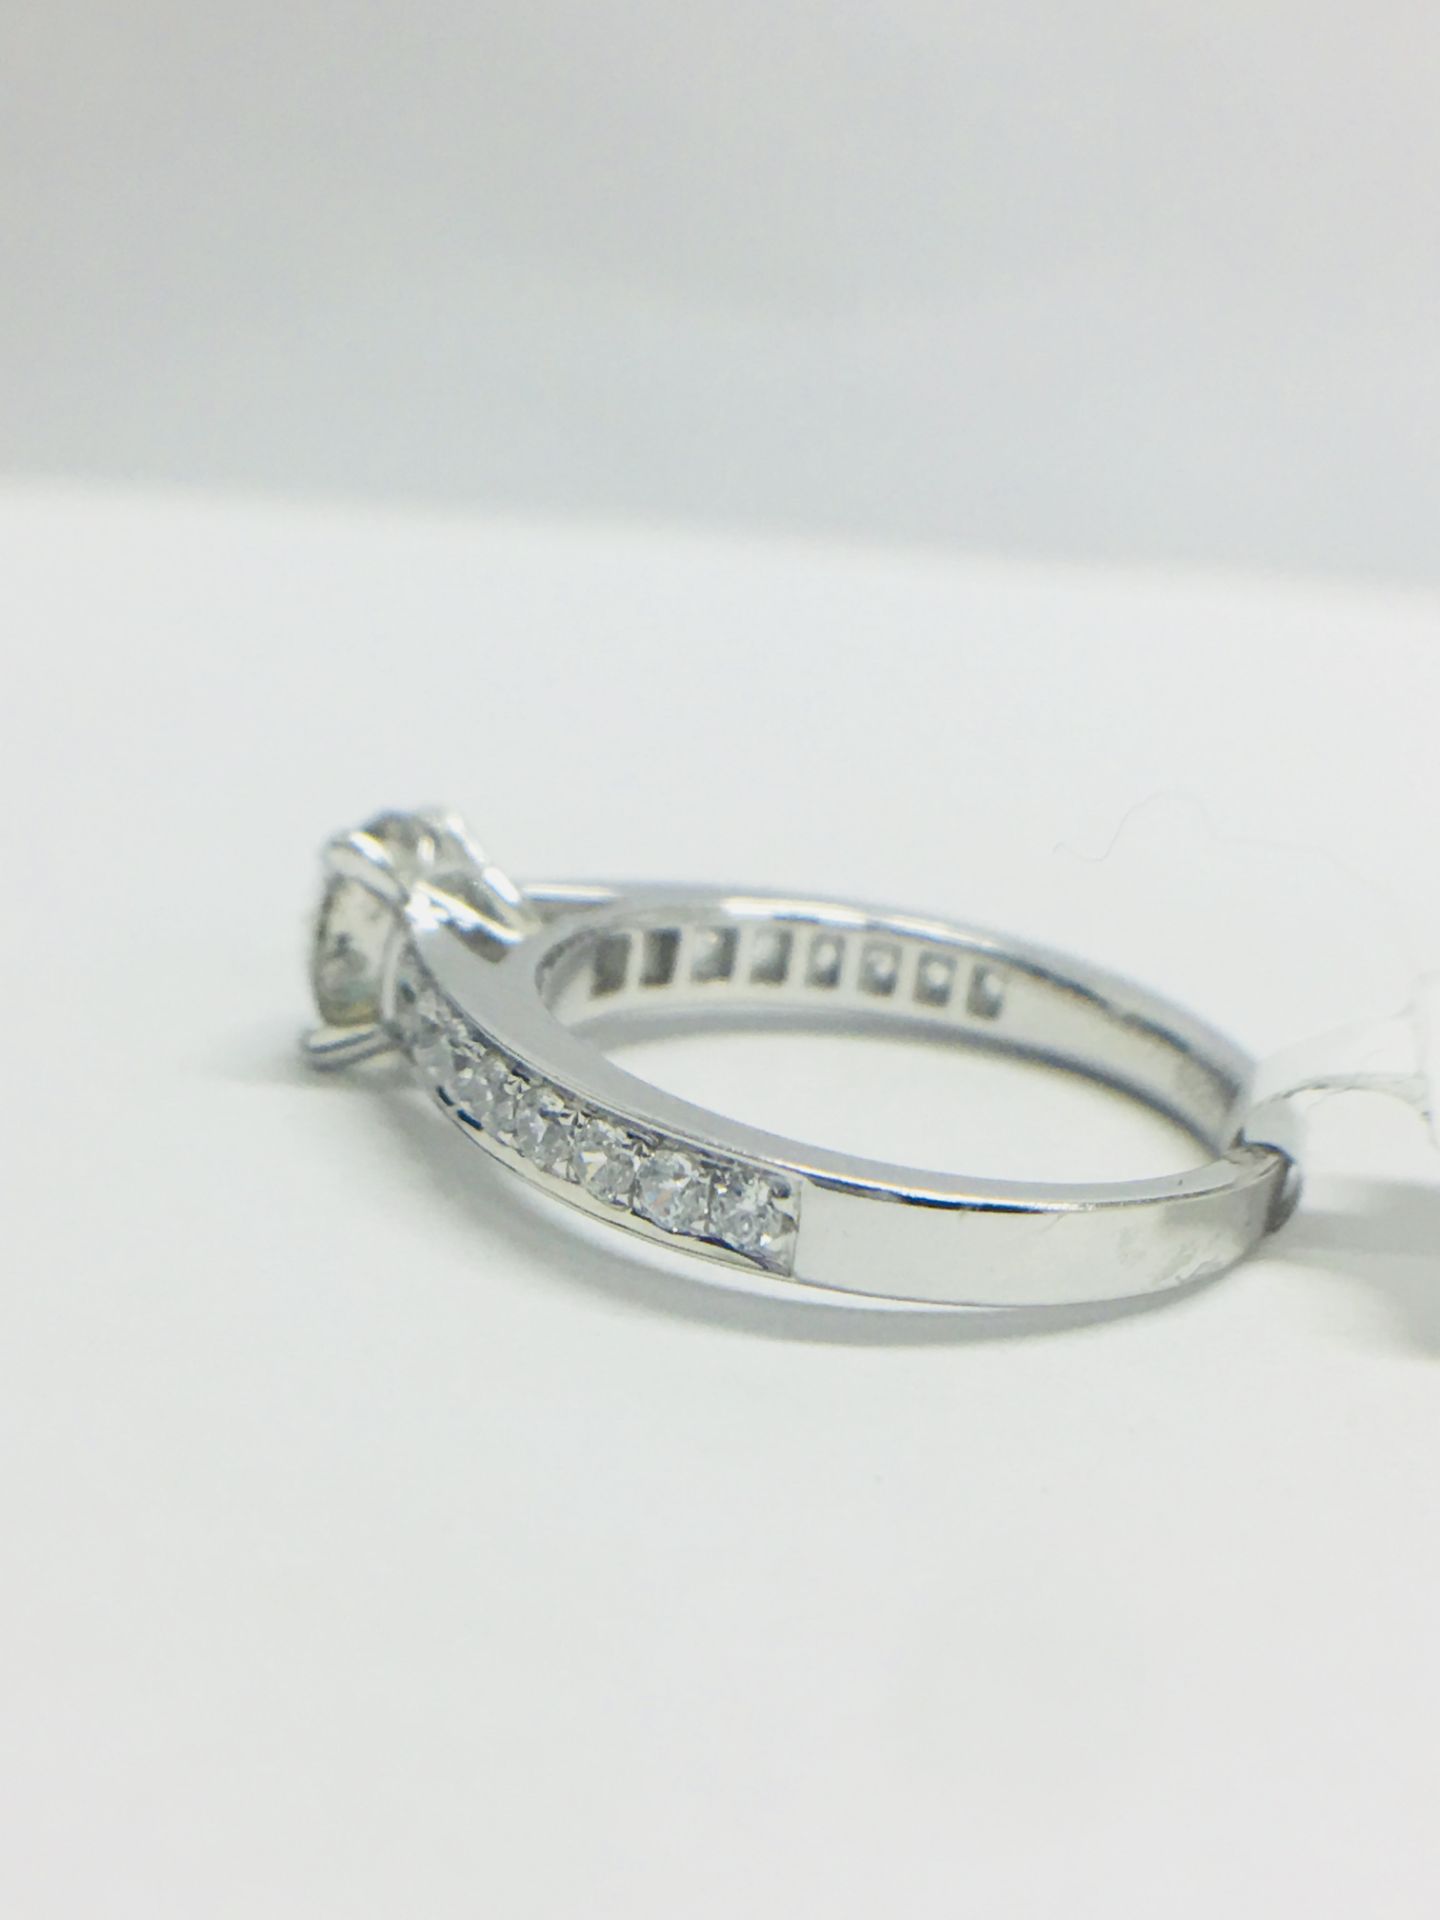 Platinum Diamond Solitaire Ring With Diamond Set Shoulder, - Image 6 of 14